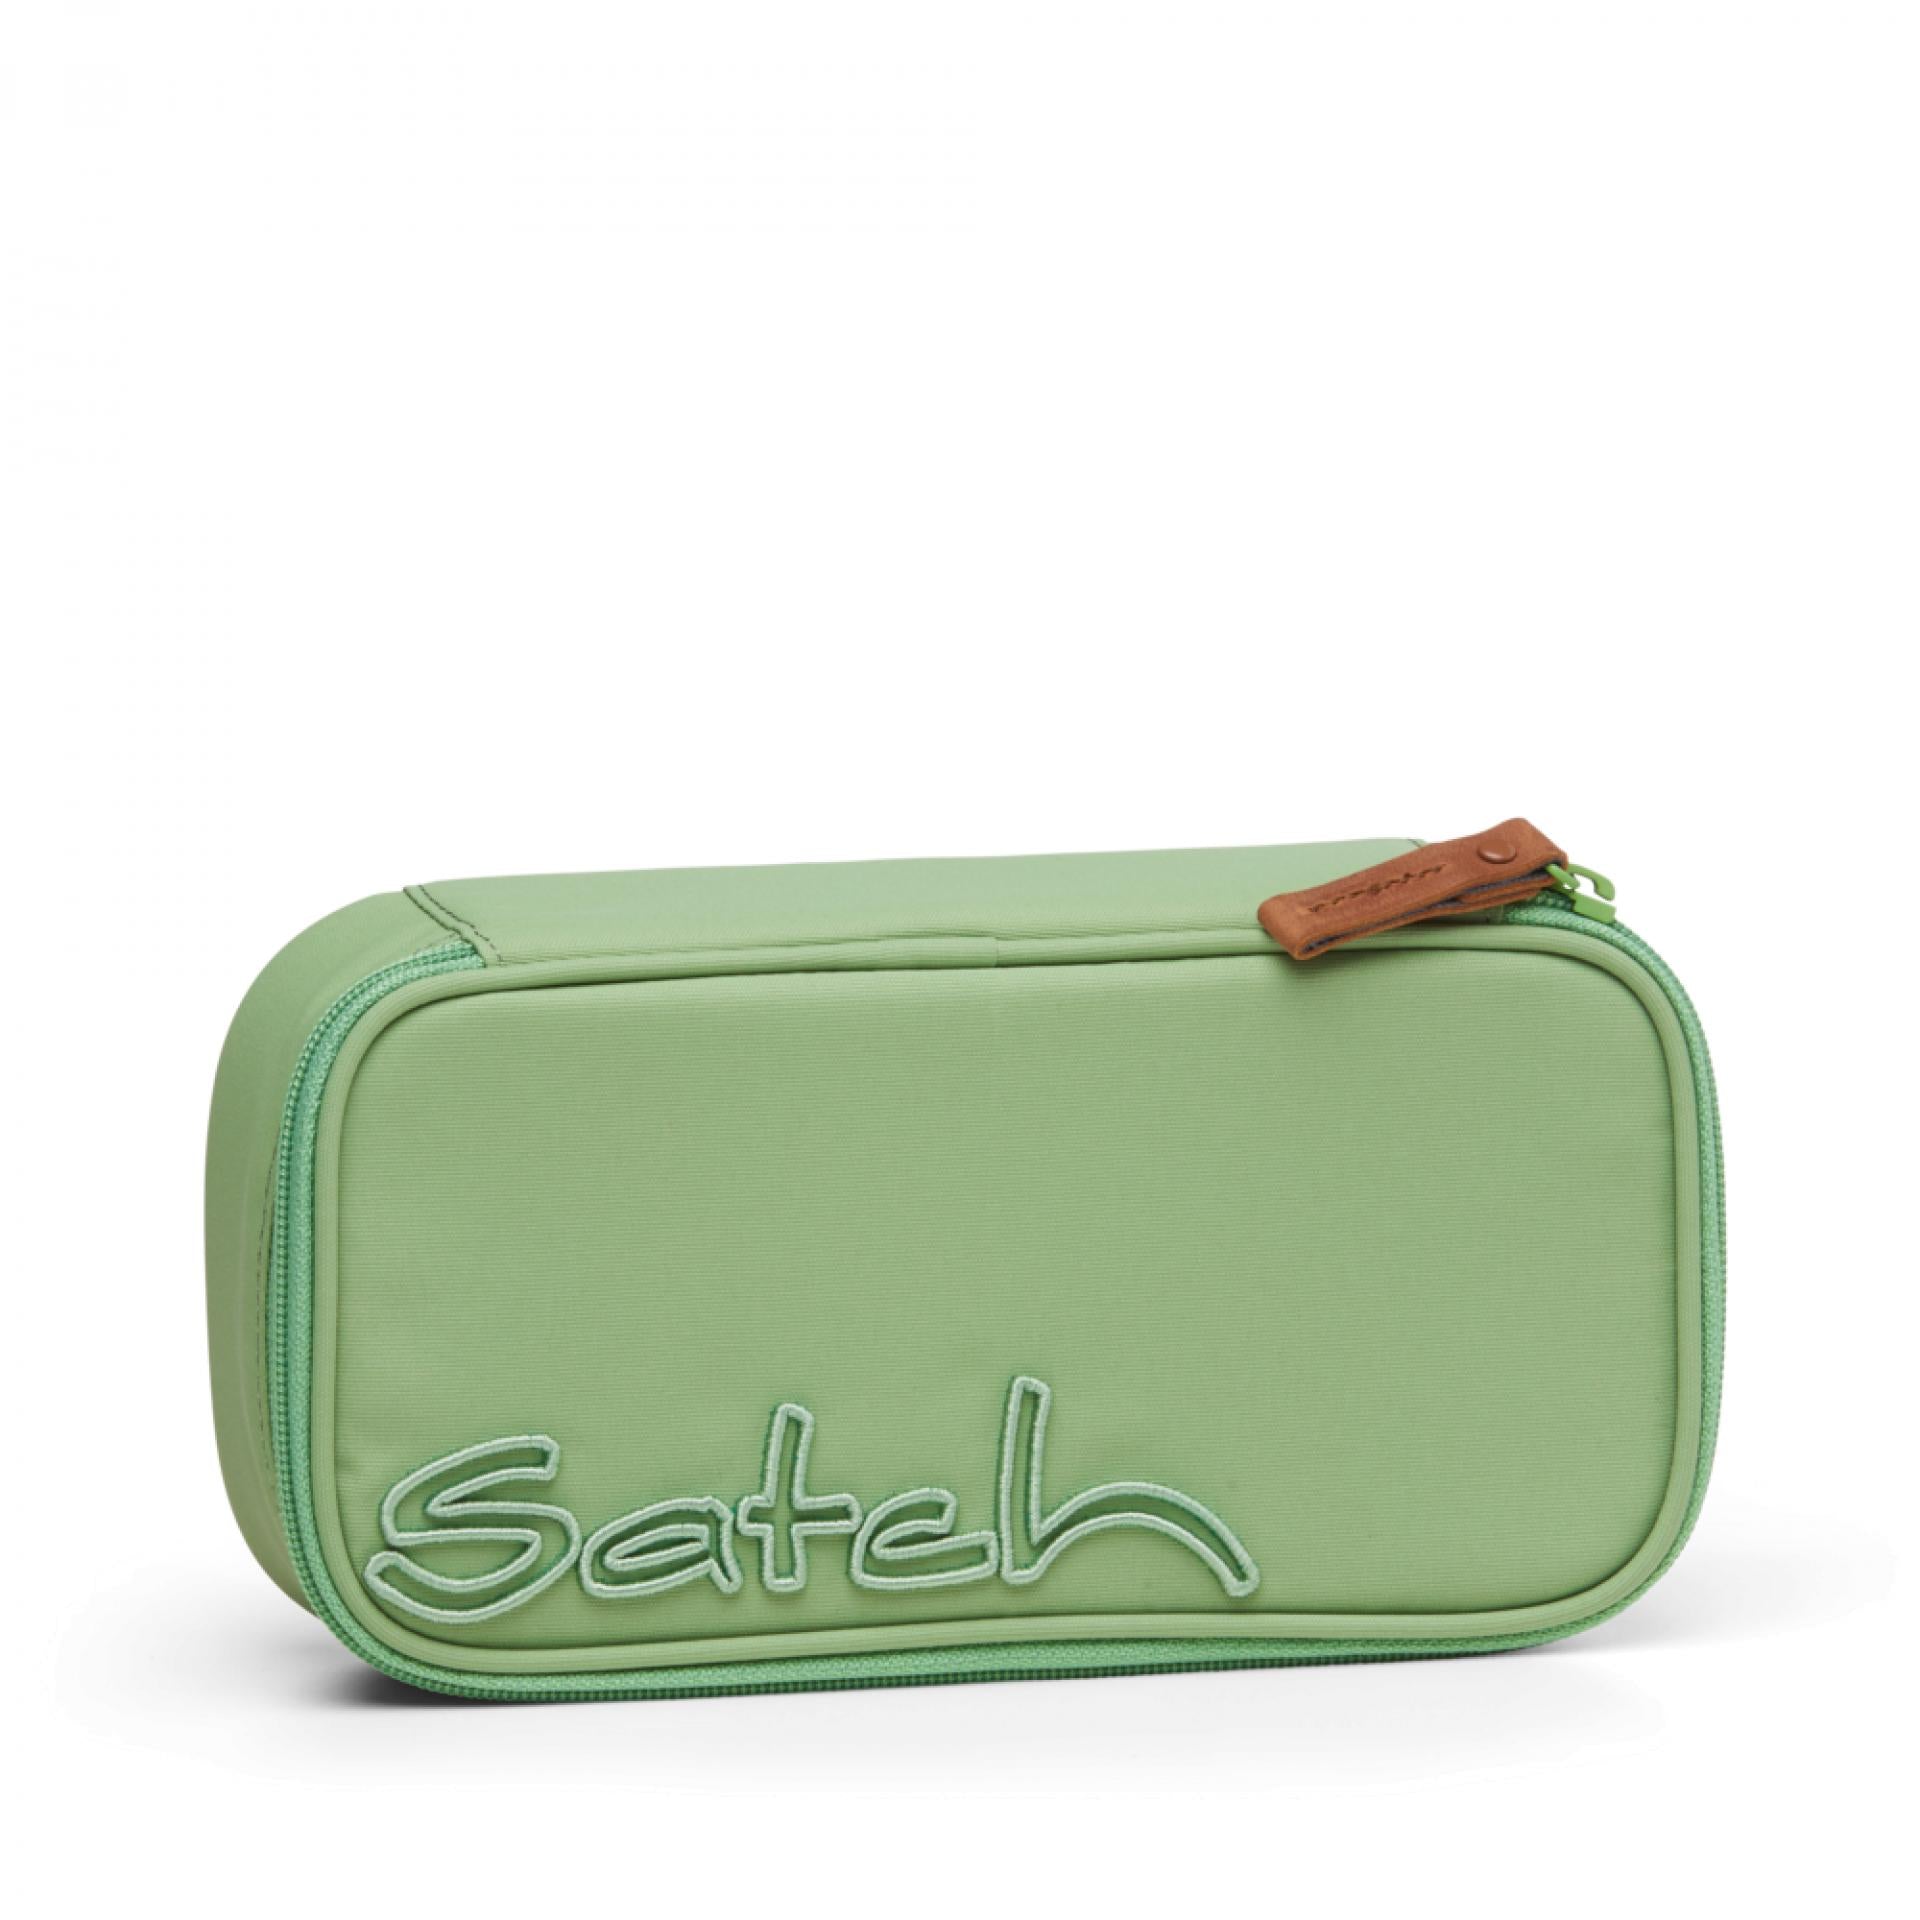 Satch Schlamperbox Stifteetui - Farbe: Nordic Jade Green